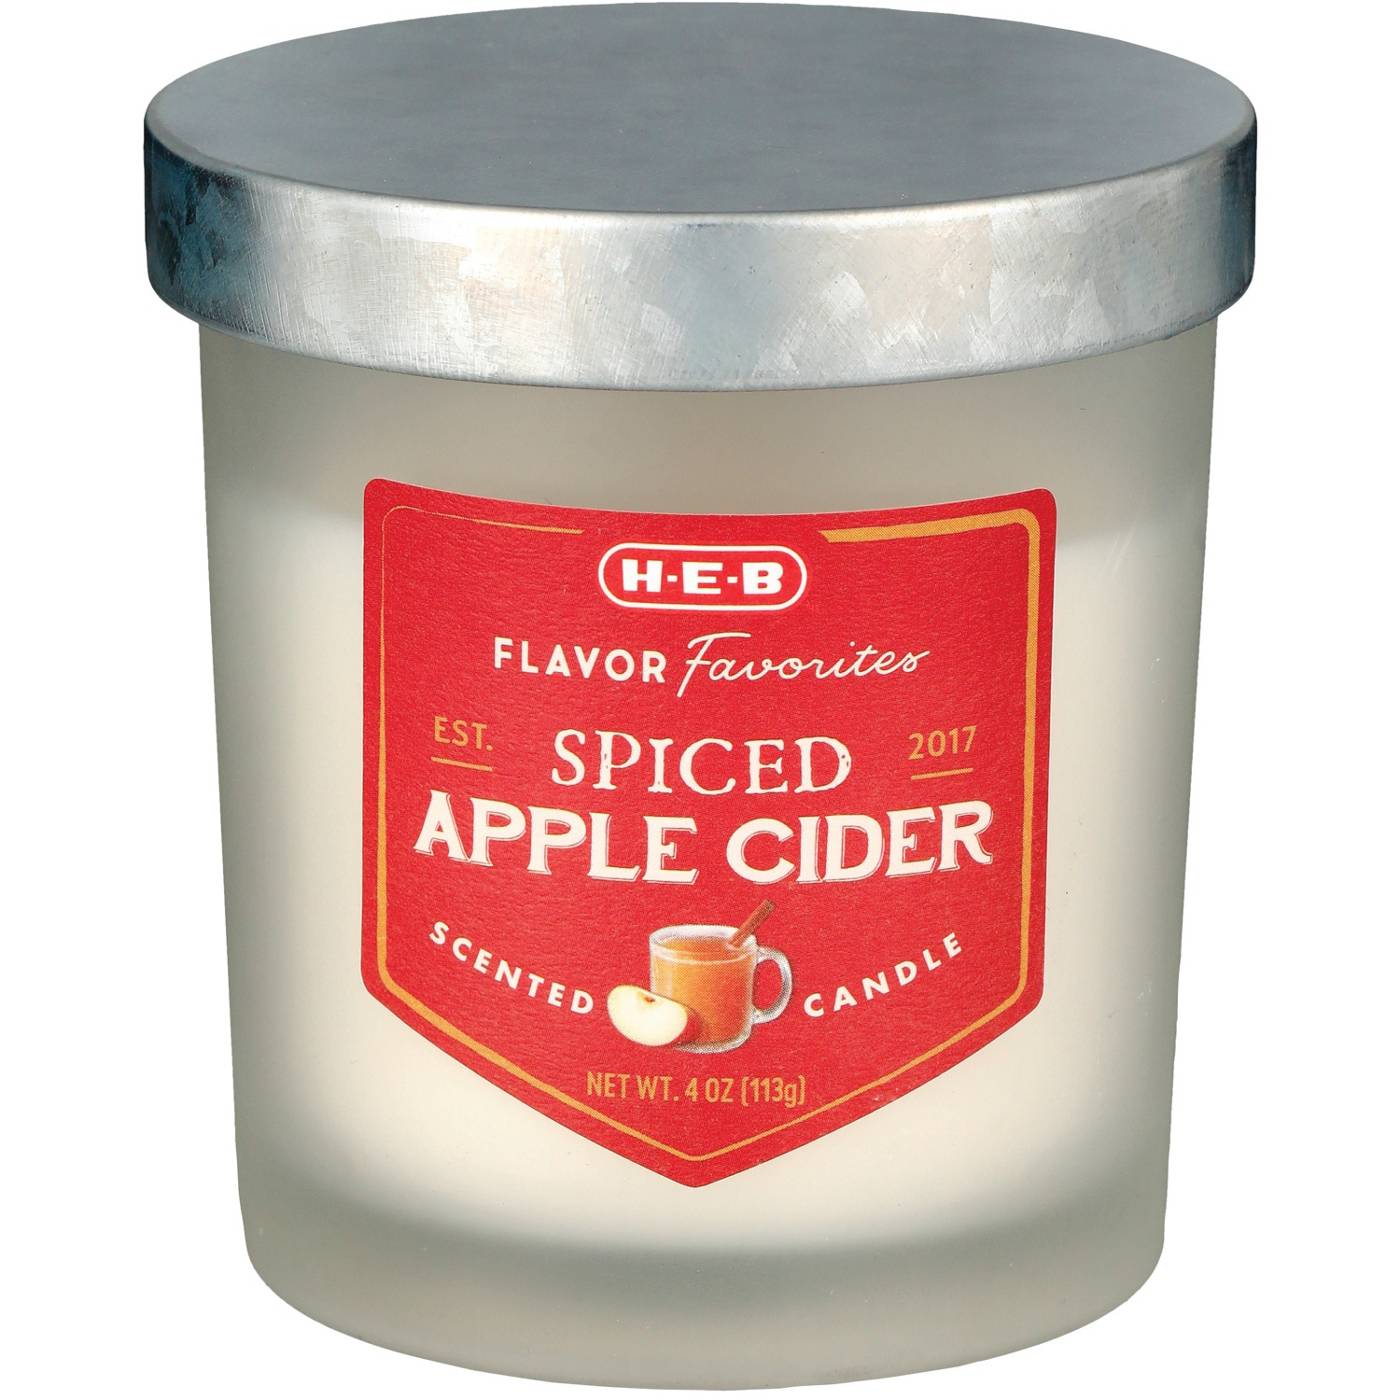 H-E-B Flavor Favorites Spiced Apple Cider Scented Candle; image 2 of 2